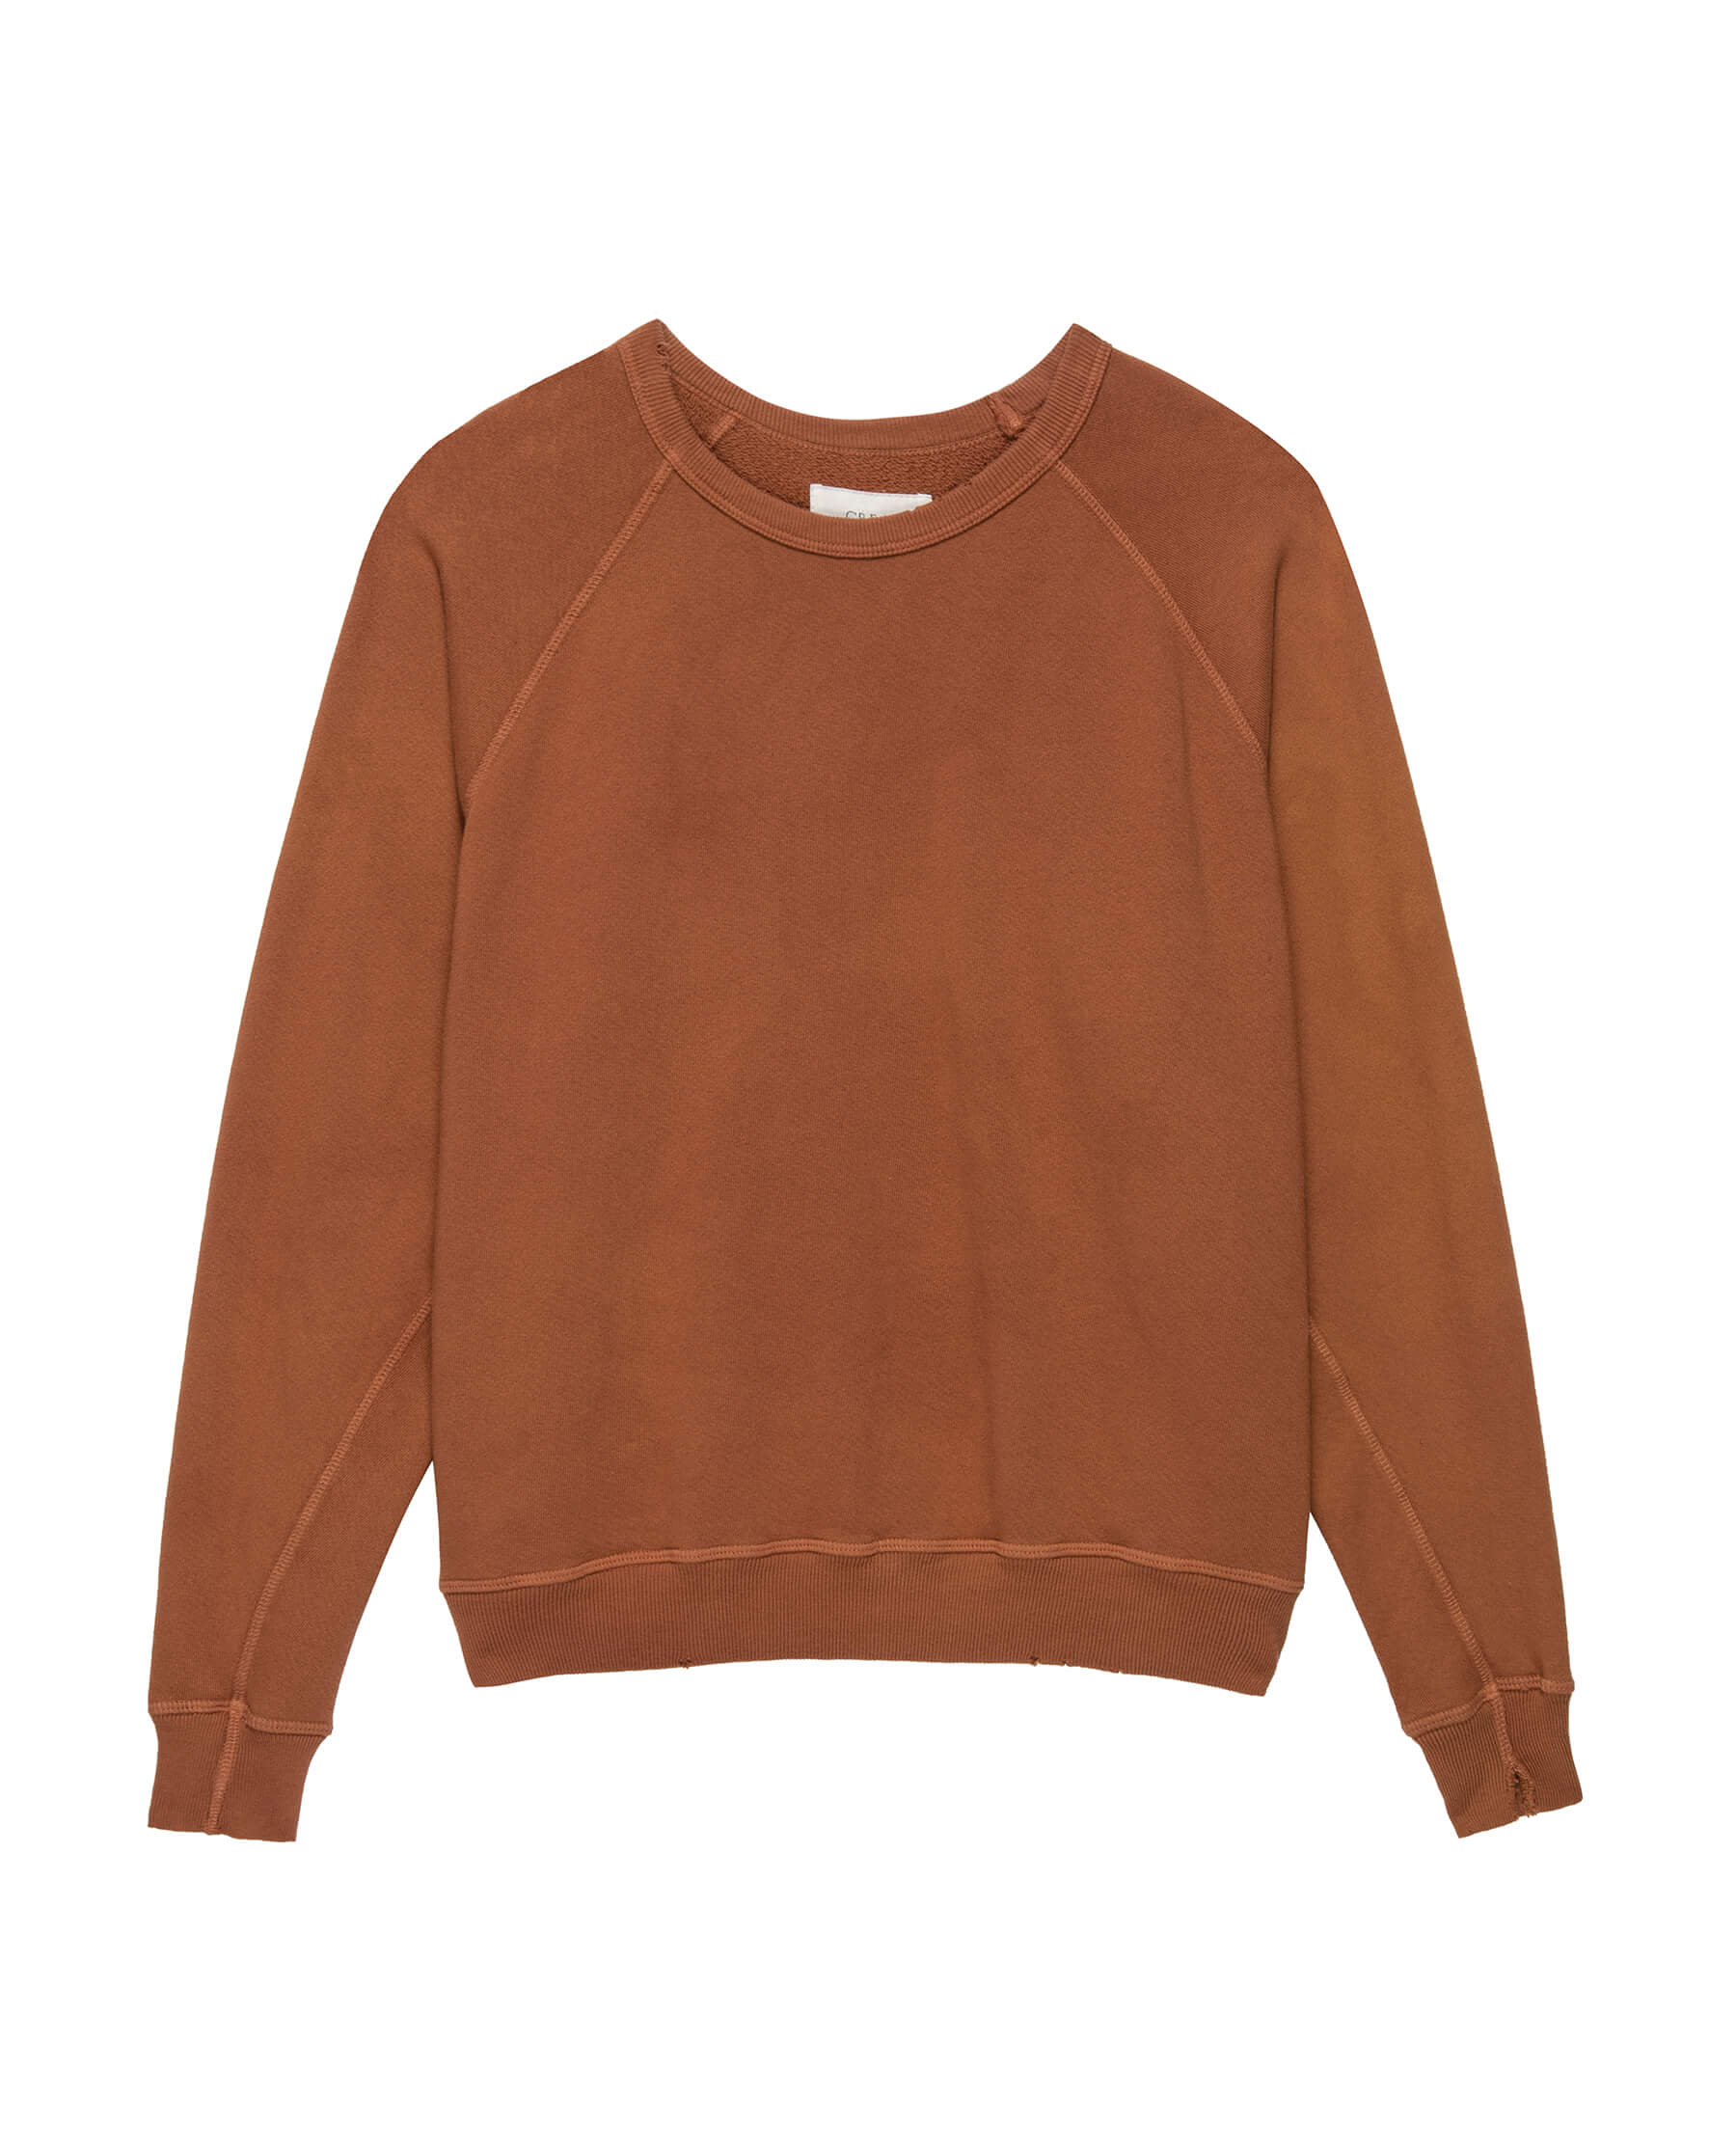 The College Sweatshirt. Solid -- Canyon SWEATSHIRTS THE GREAT. SU23 KNITS